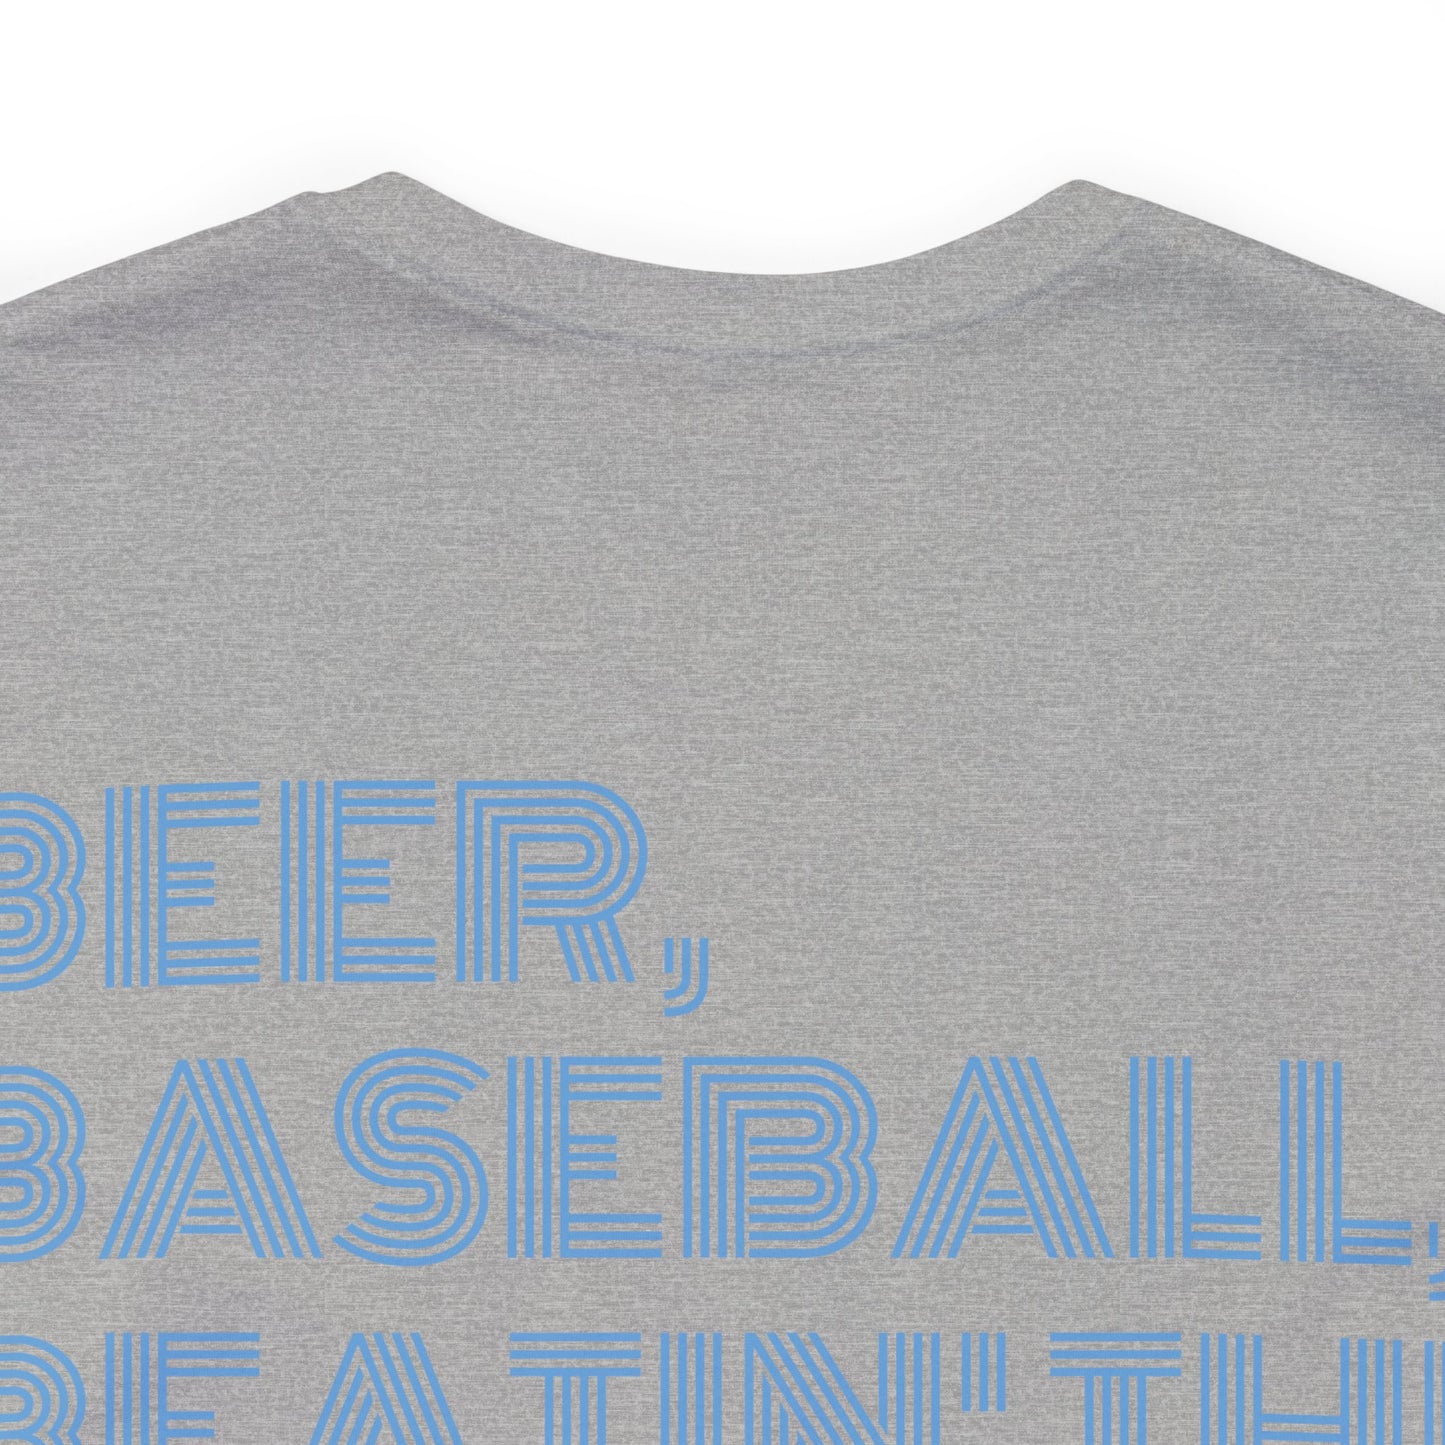 Beer, Baseball, Beatin' Braves Tee